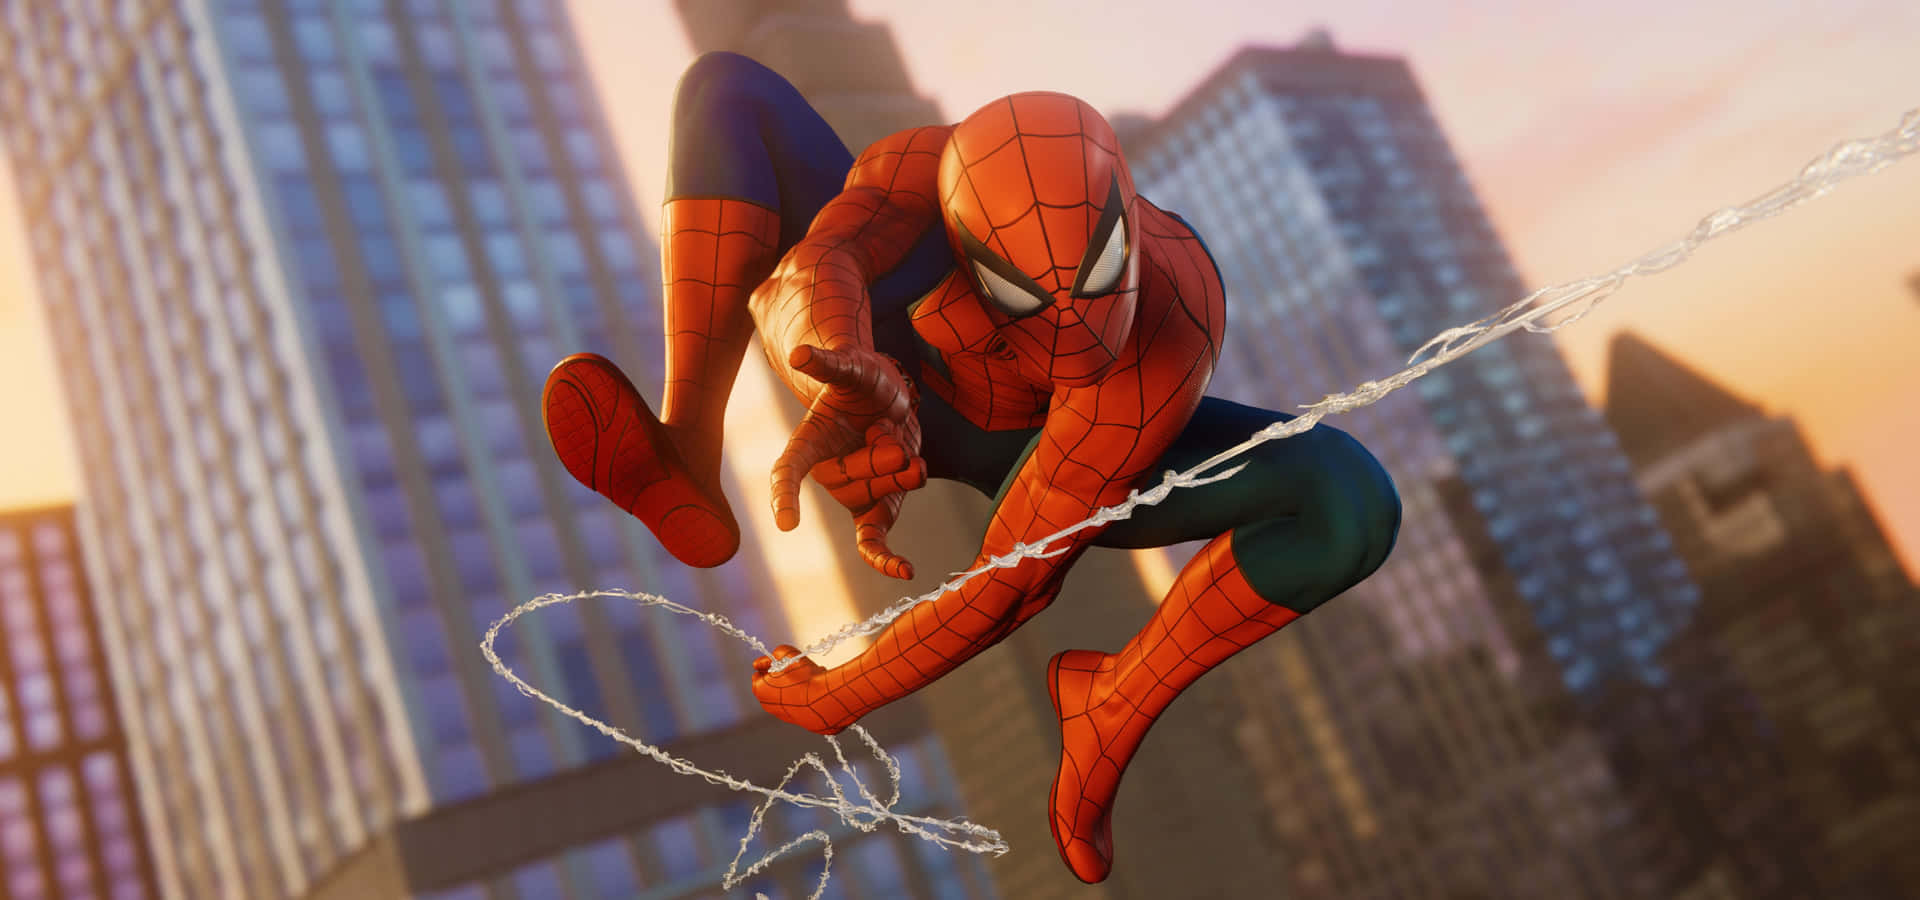 Dynamic Spider-Man Web Slinging Action Wallpaper